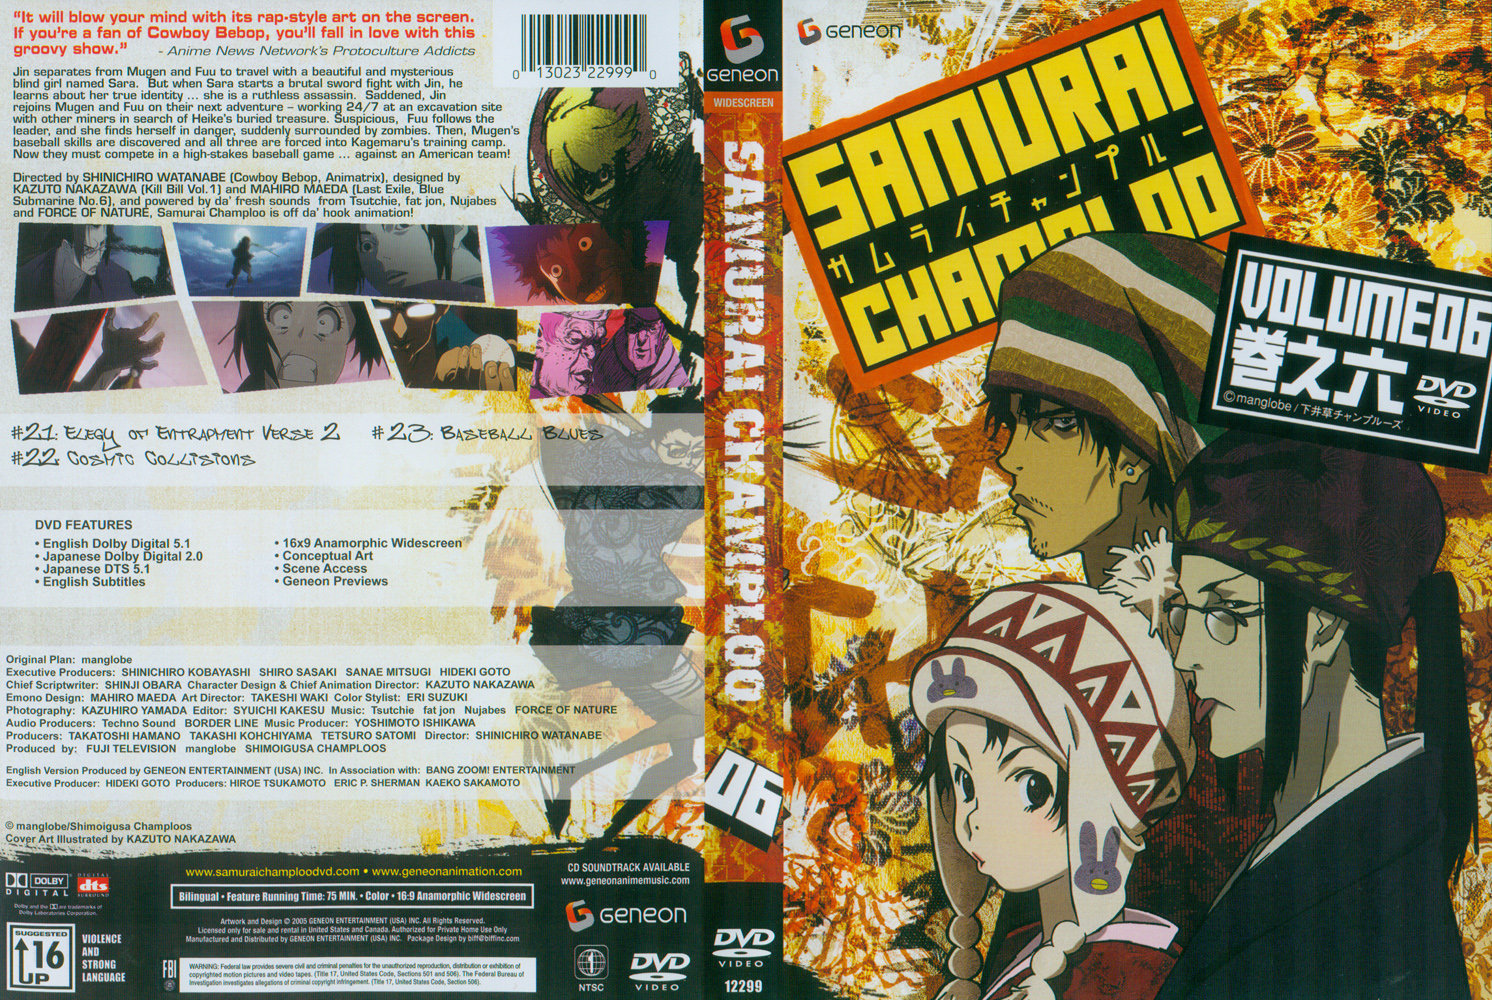 Jaquette DVD Samurai champloo vol 06 Zone 1